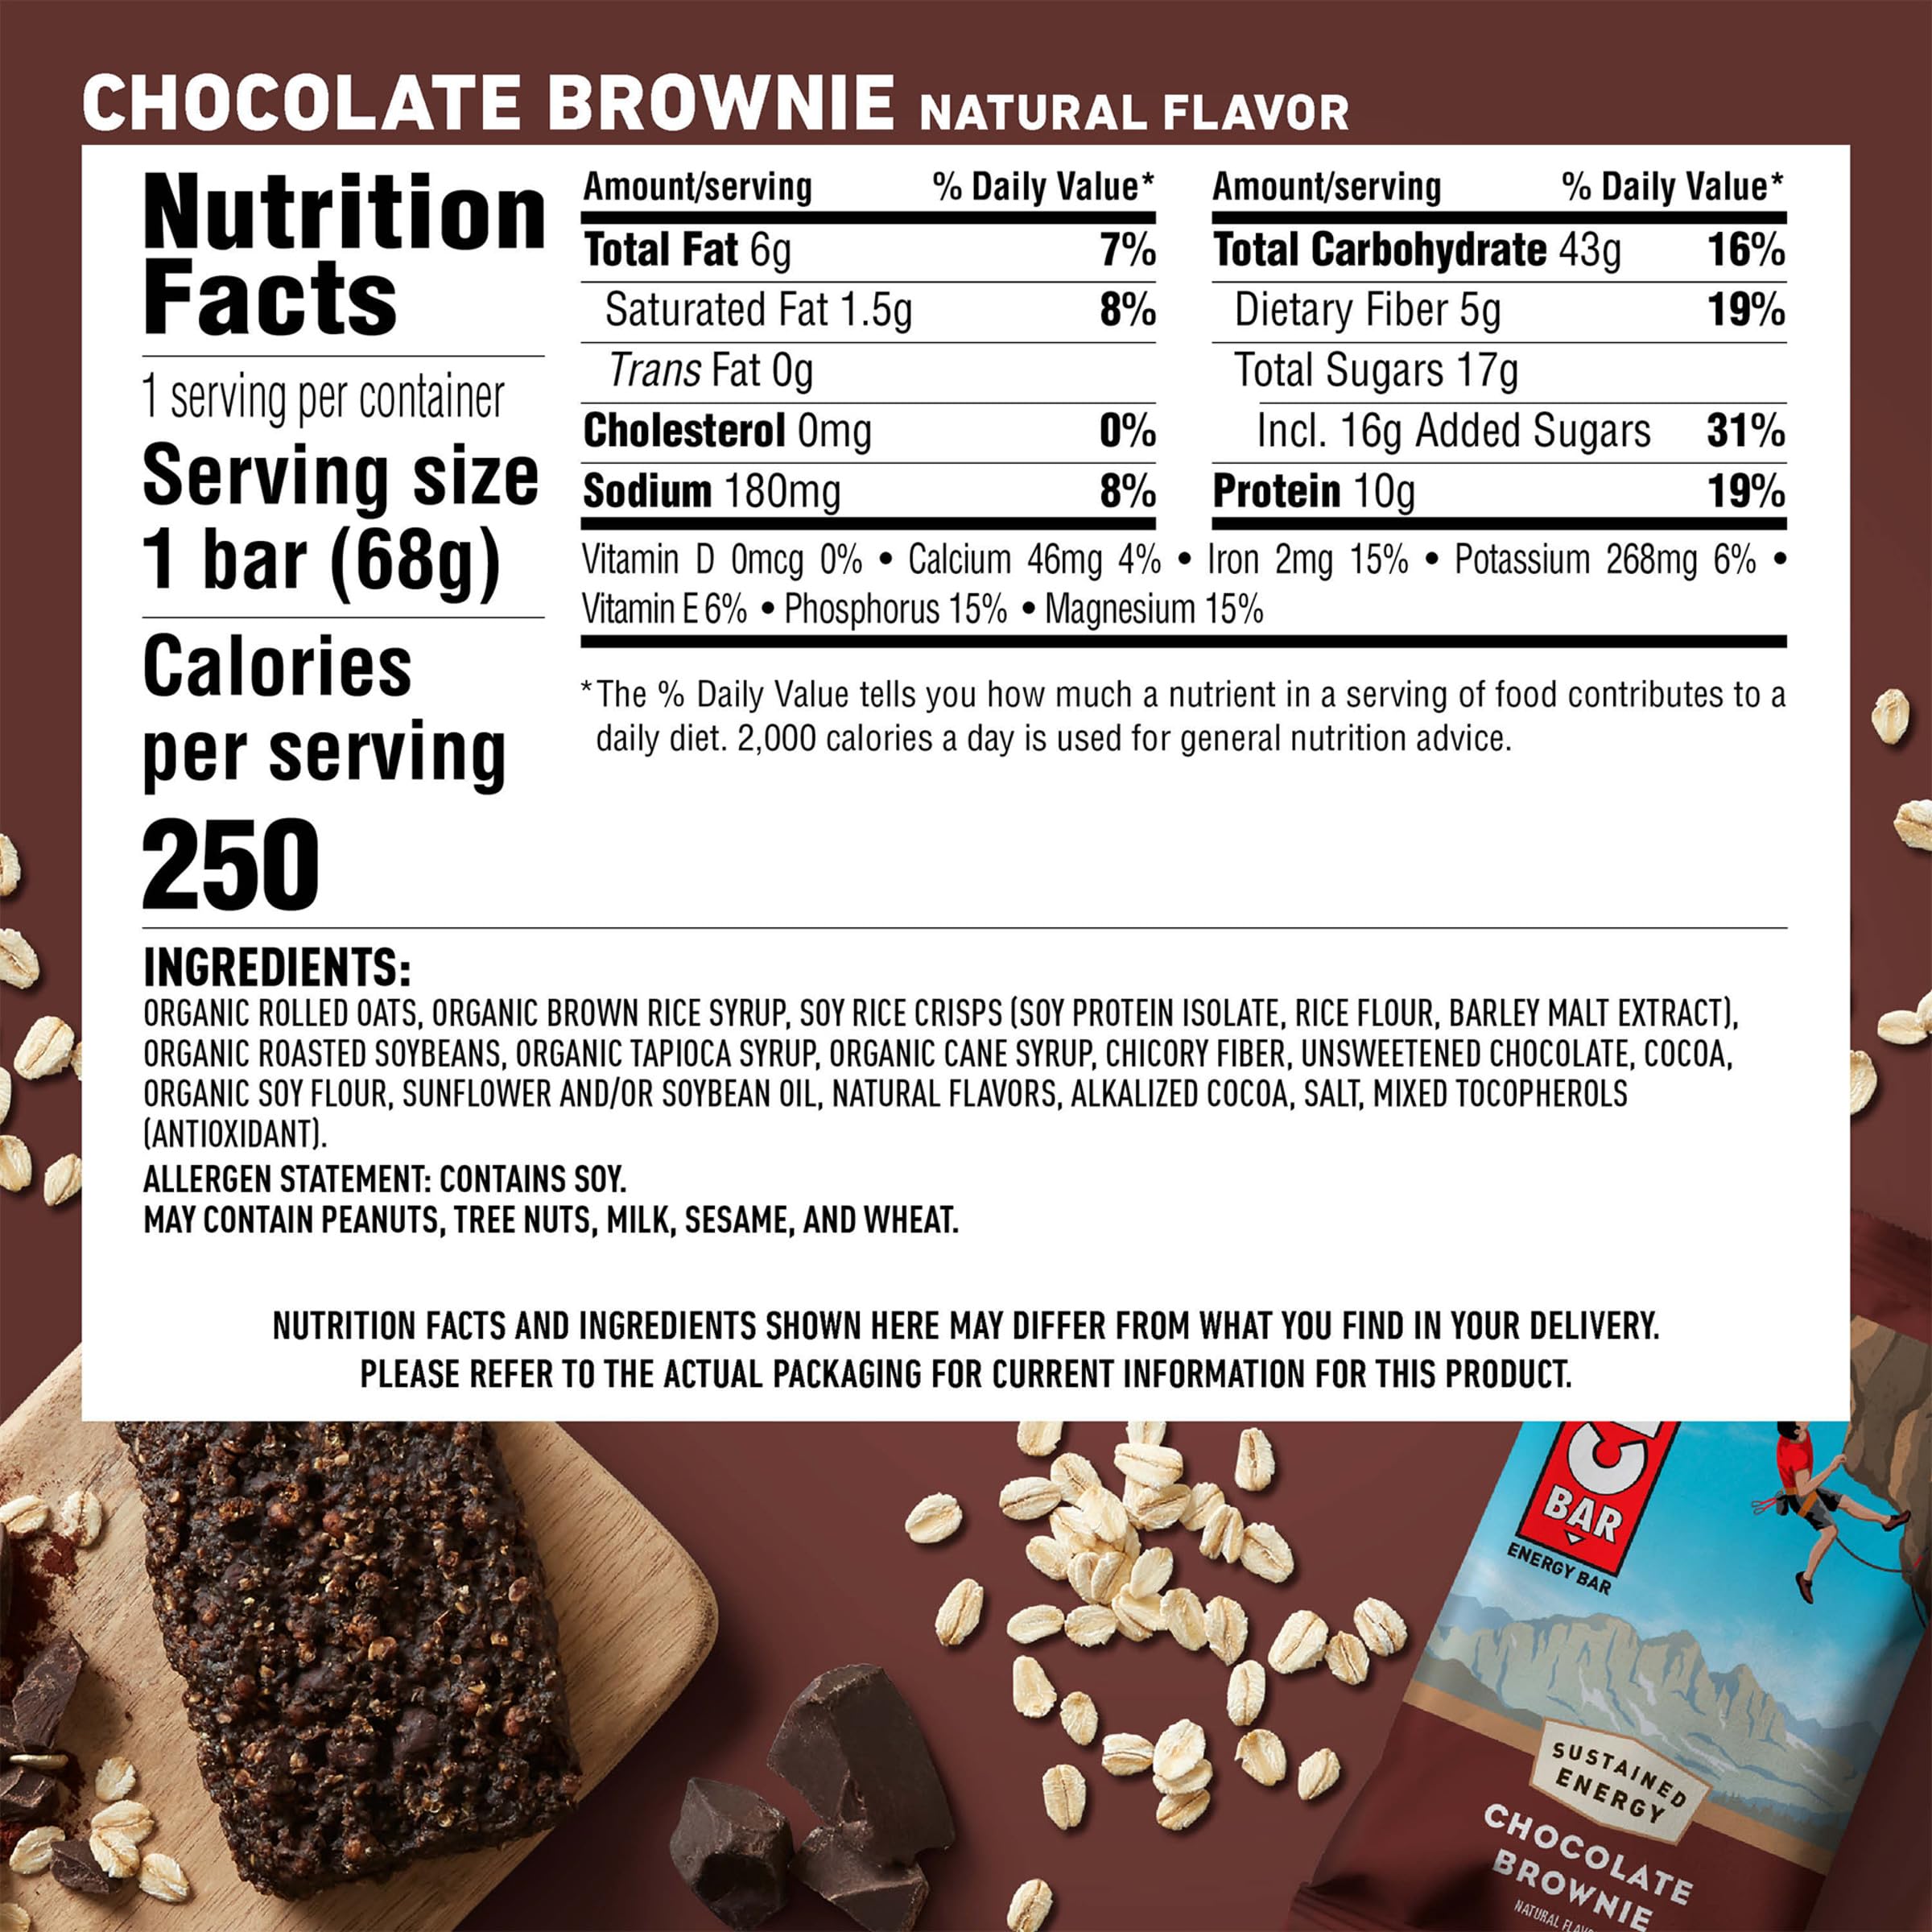 CLIF BAR - Chocolate Brownie - Energy Bars - 2.4 oz. (12 Pack)